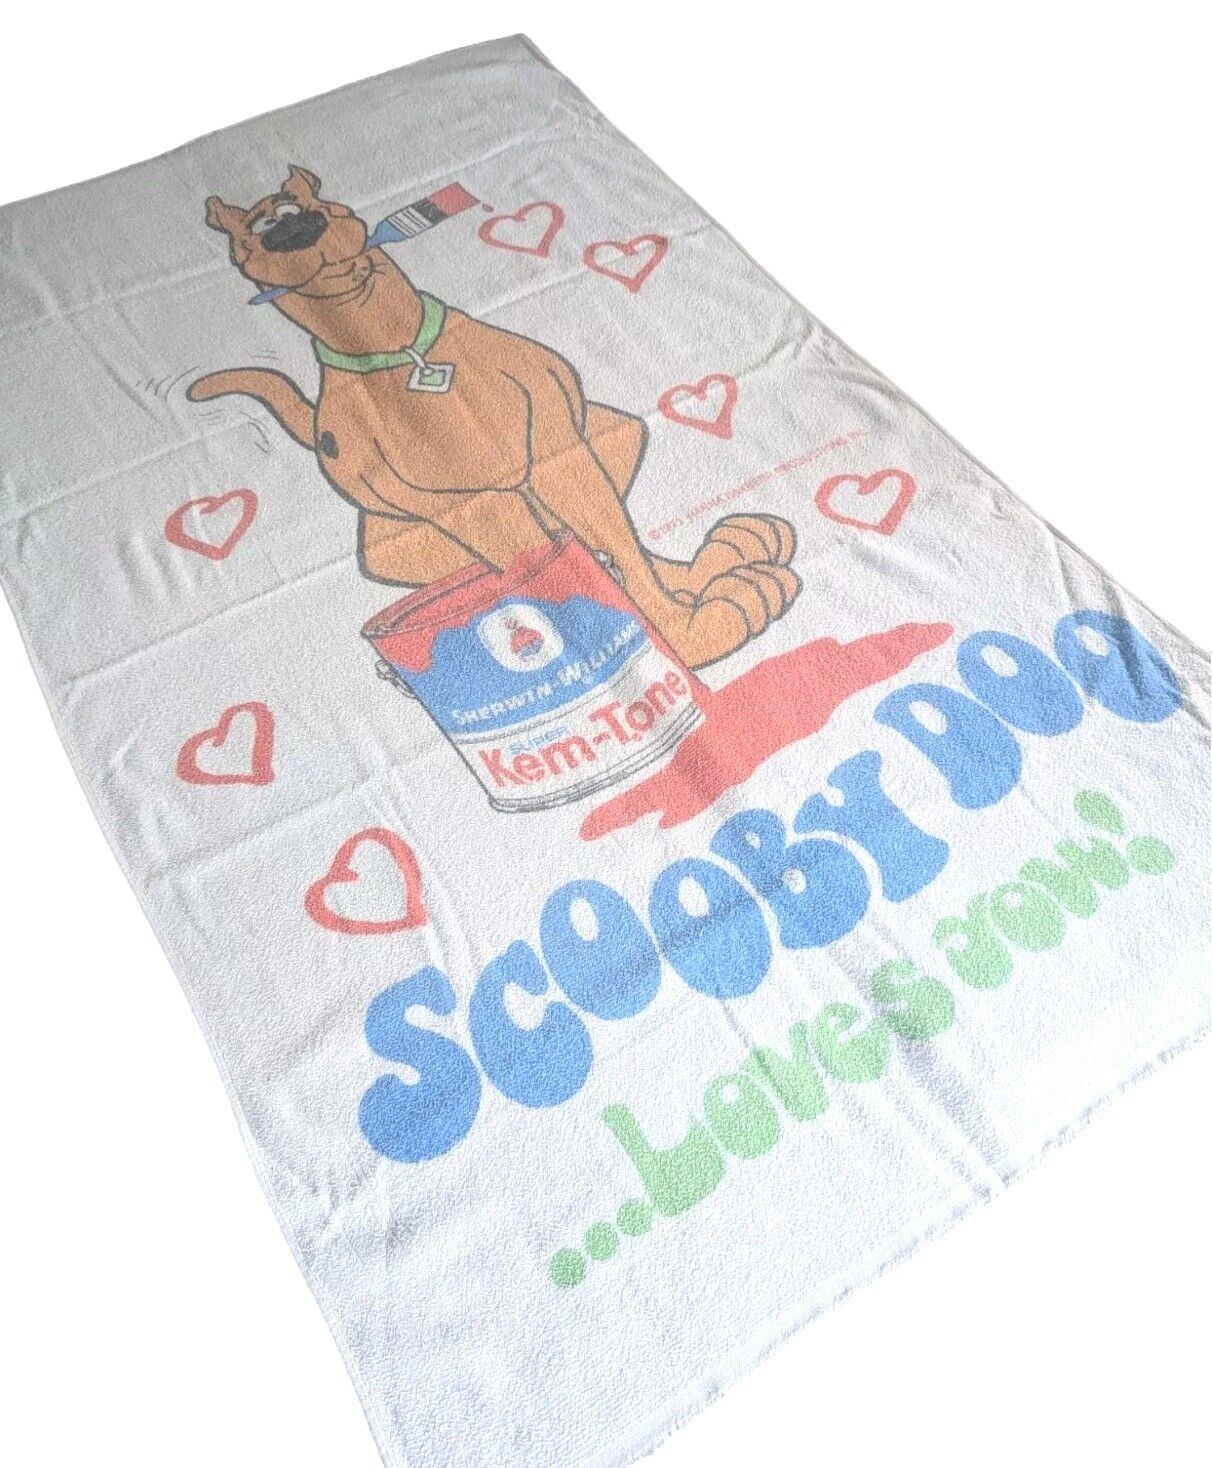 Vintage 1973 Scooby Doo Sherwin Williams KemTone Paint Beach Towel Cannon Cotton